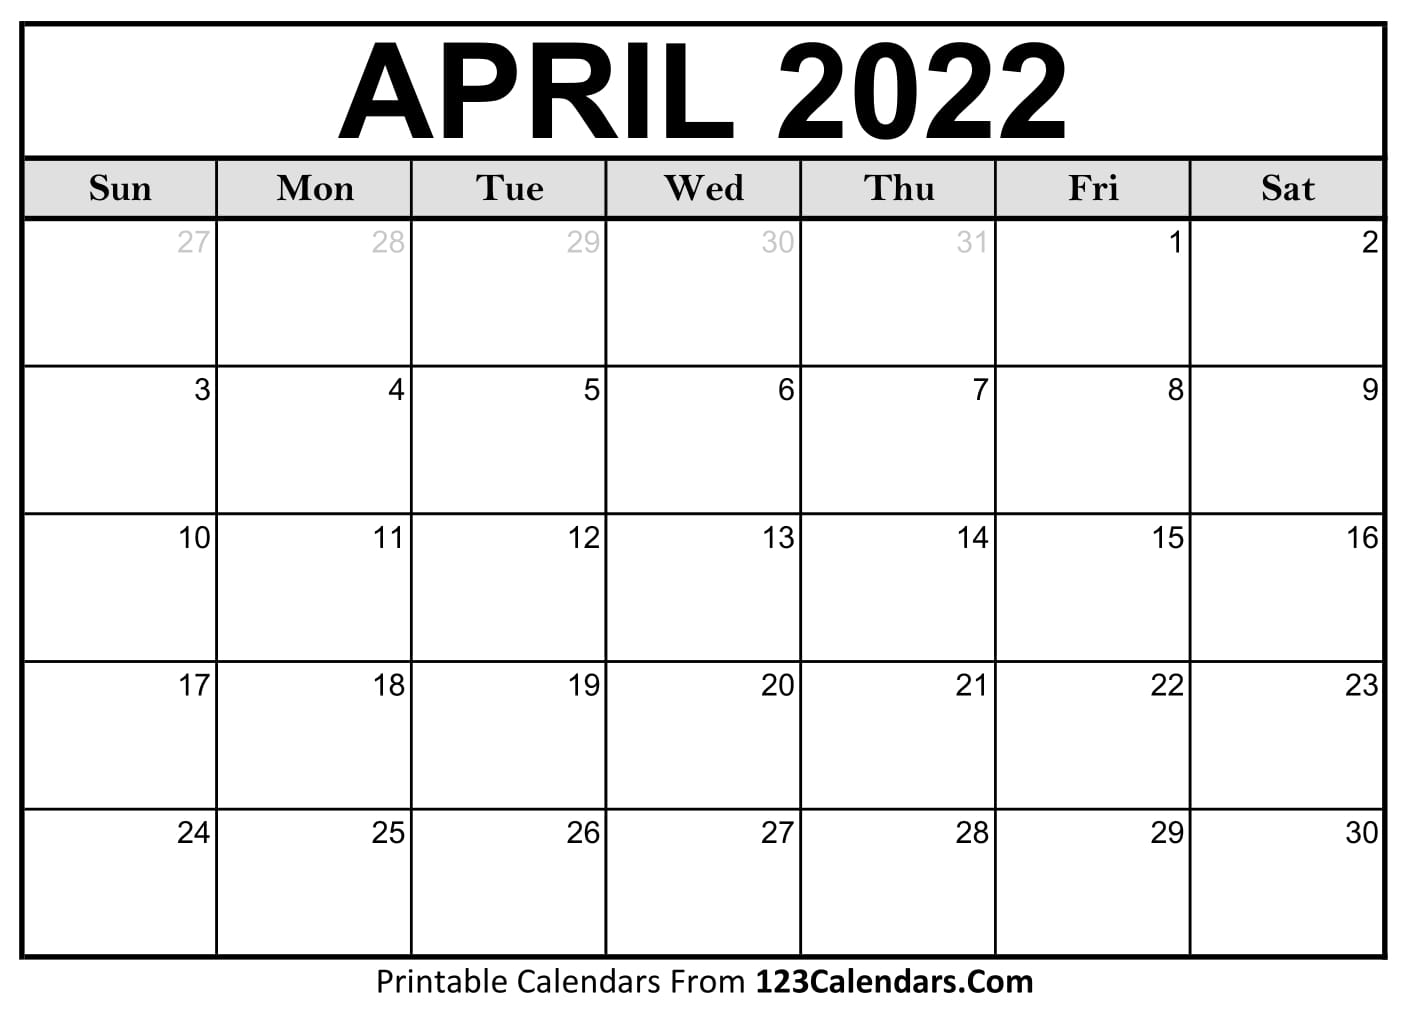 Monthly Calendar April 2022 Printable Printable April 2022 Calendar Templates - 123Calendars.com